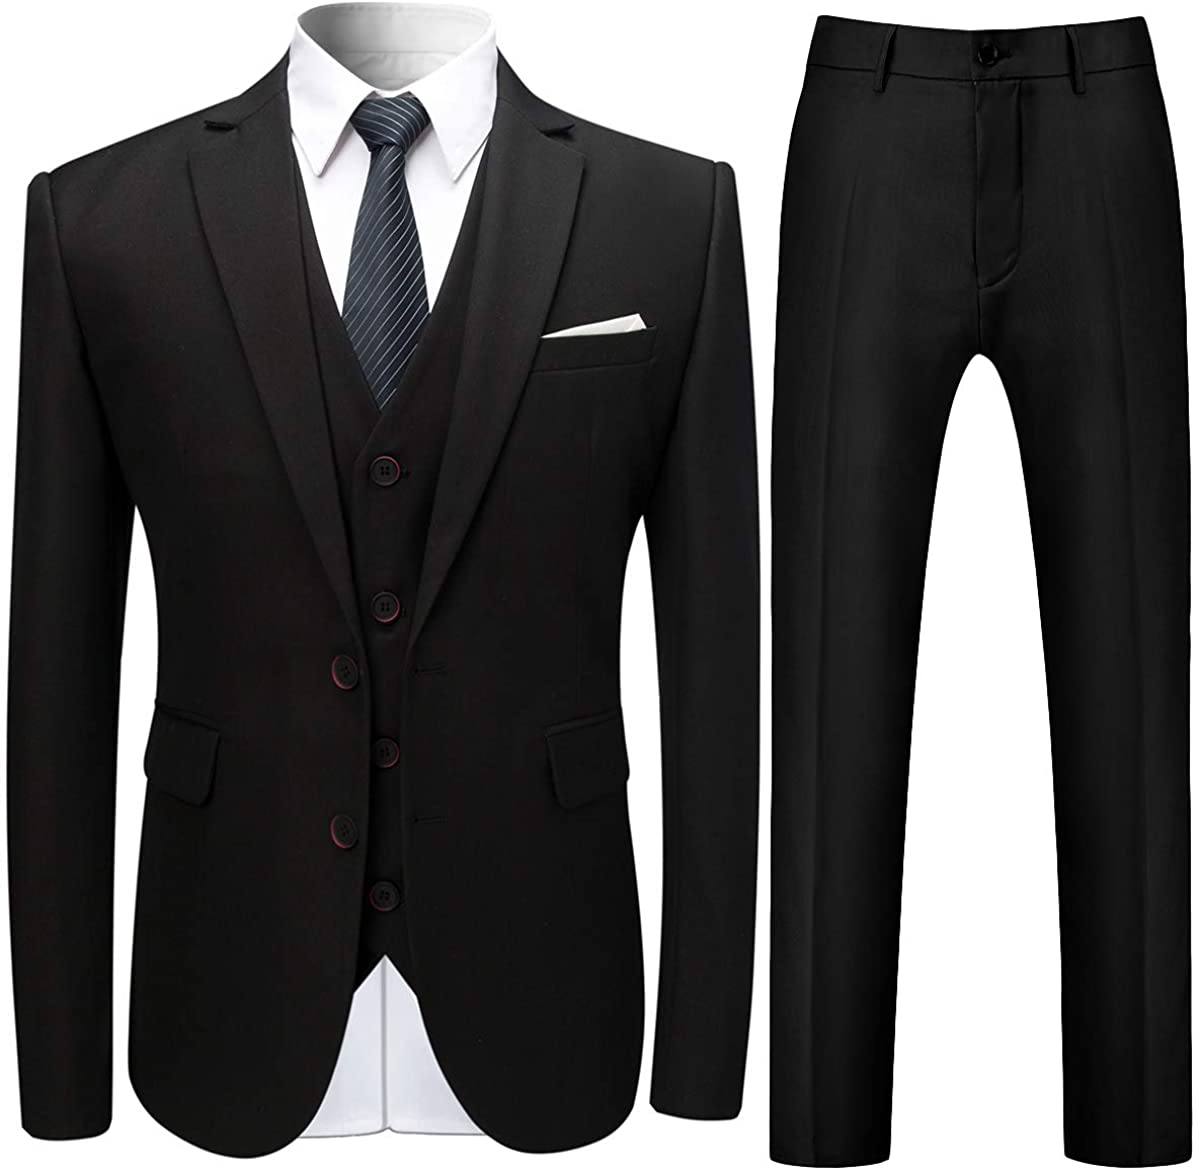 Mens Lightweight Jacket.Men’s Suit Slim 3-Piece Suit Blazer Business Wedding Party Jacket Vest & Pants Navy 